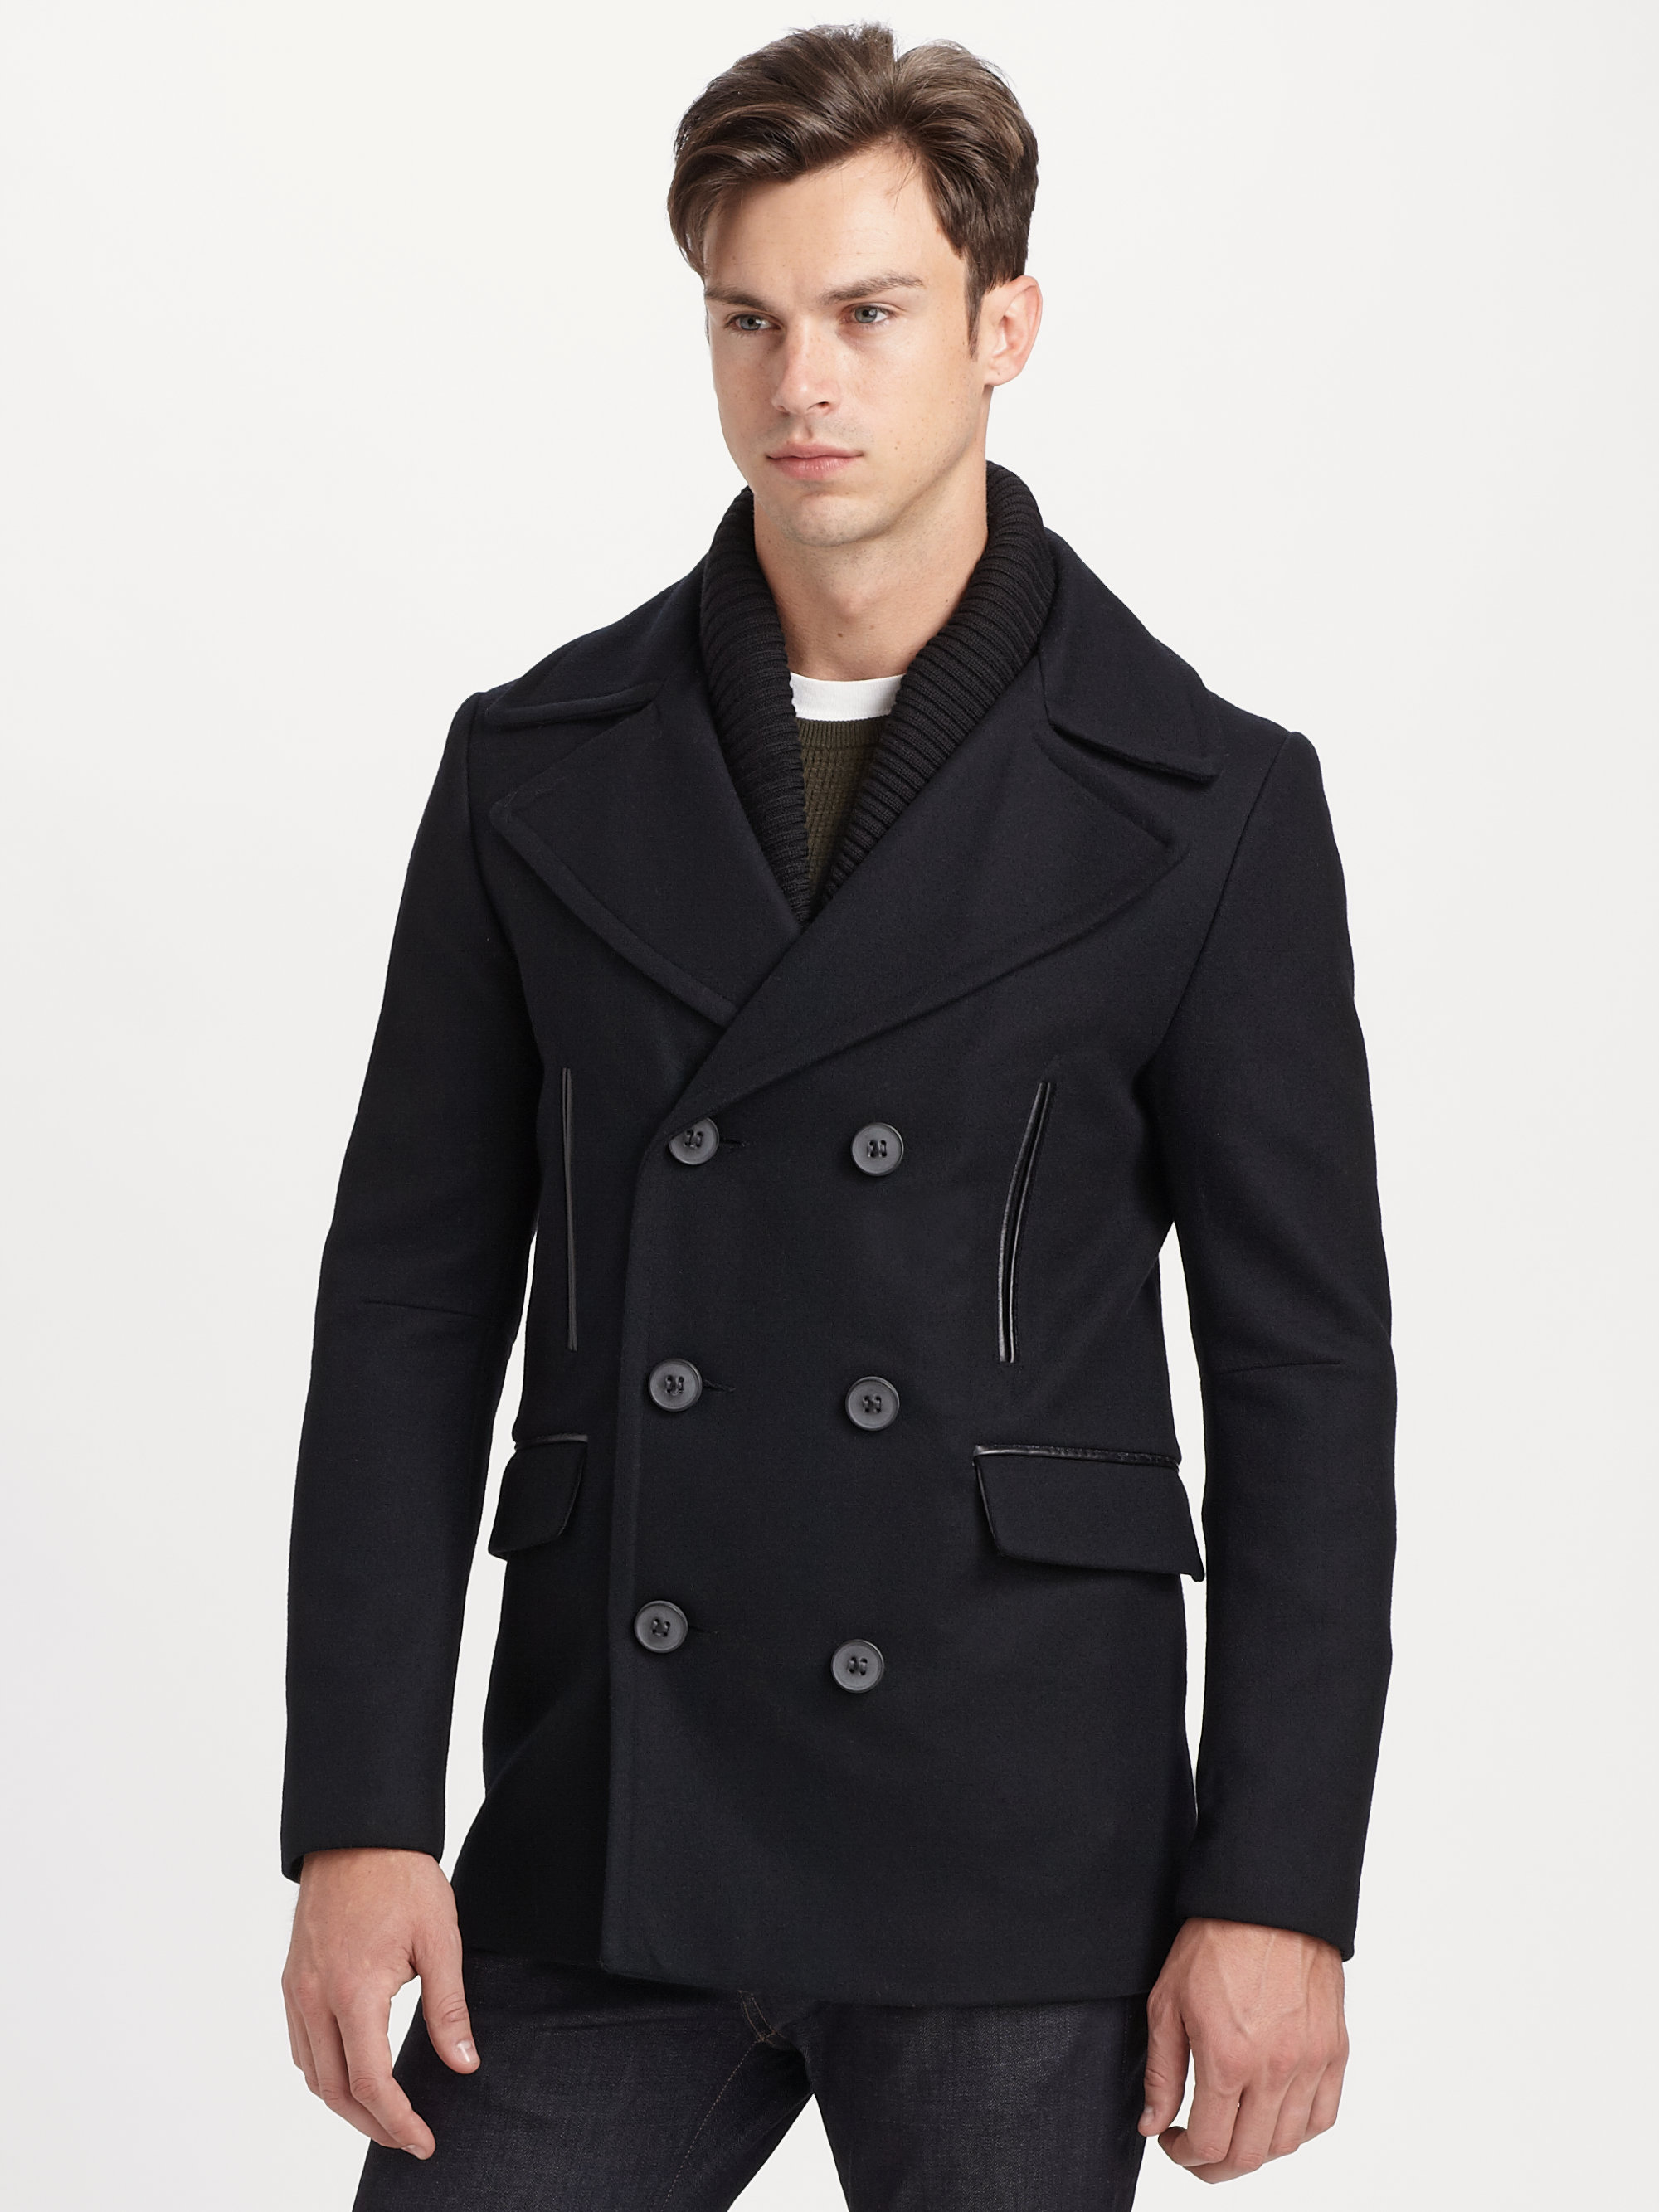 Mackage Alvin Pea Coat in Black for Men | Lyst